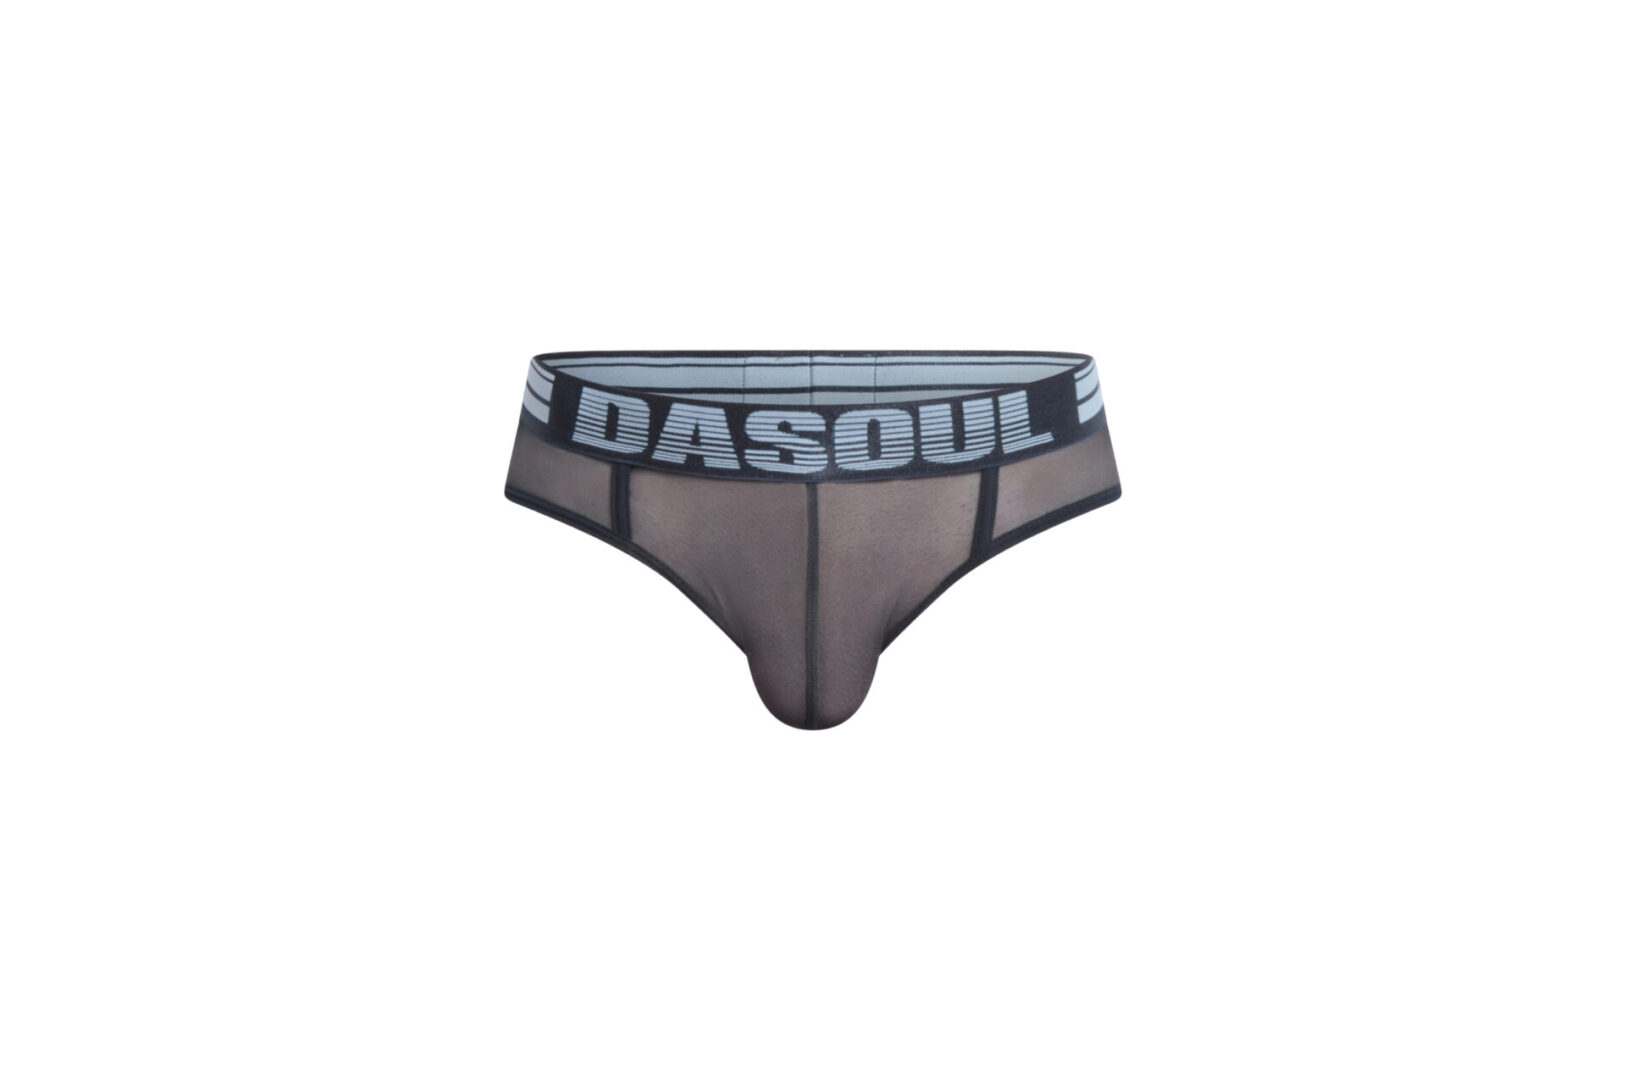 A dasoul underwear brief with blue band